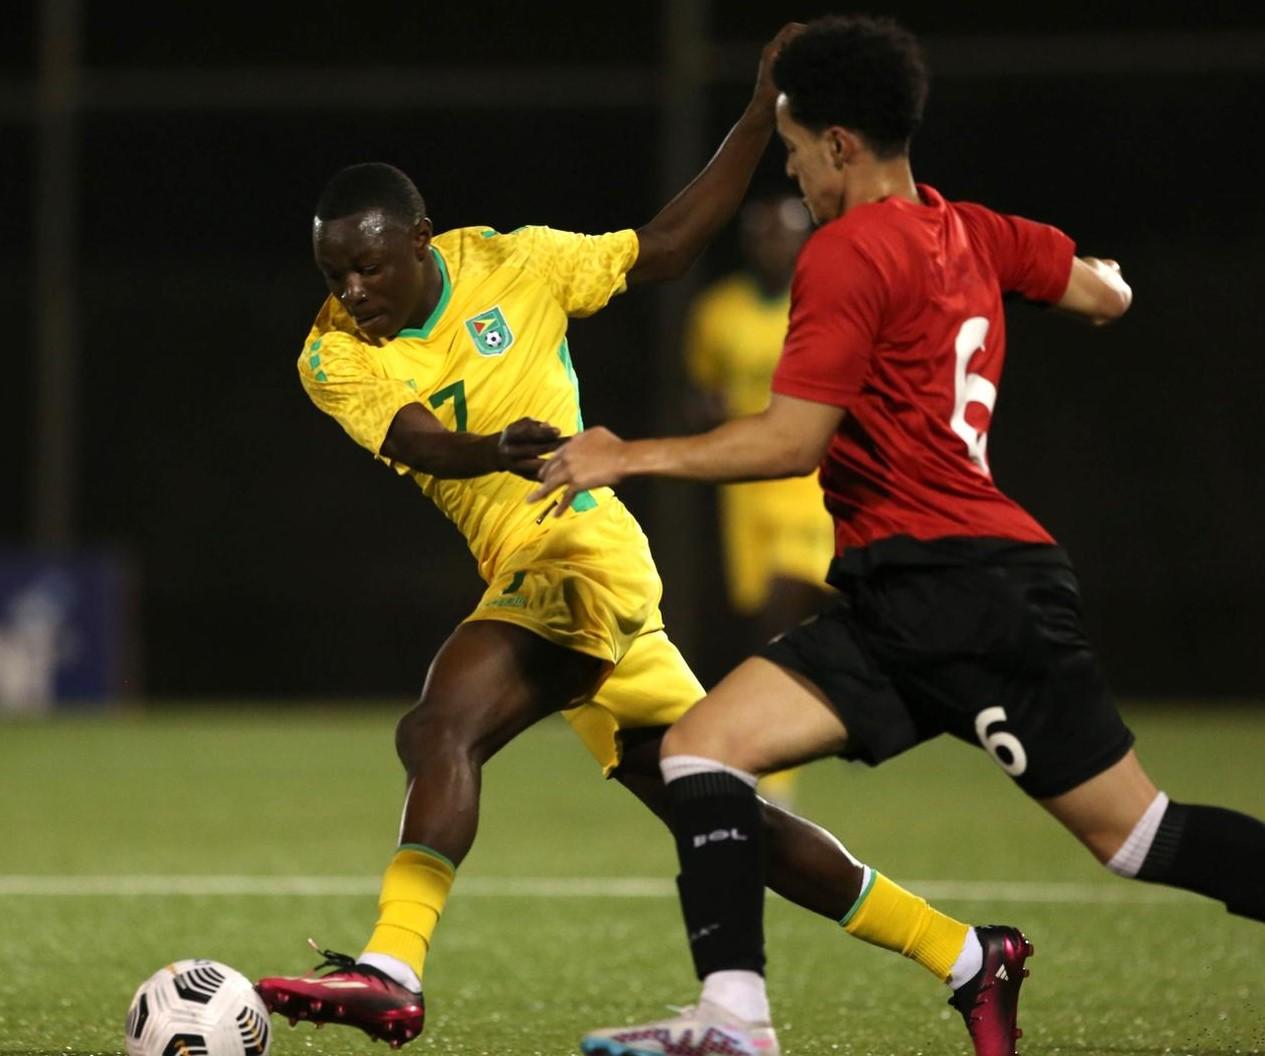 Guyana’s Omari Glasgow evades Montserrat’s Brandon Barzey during their clash at Wildey Turf inside the Sir Garfield Sobers Sports Complex in Barbados.